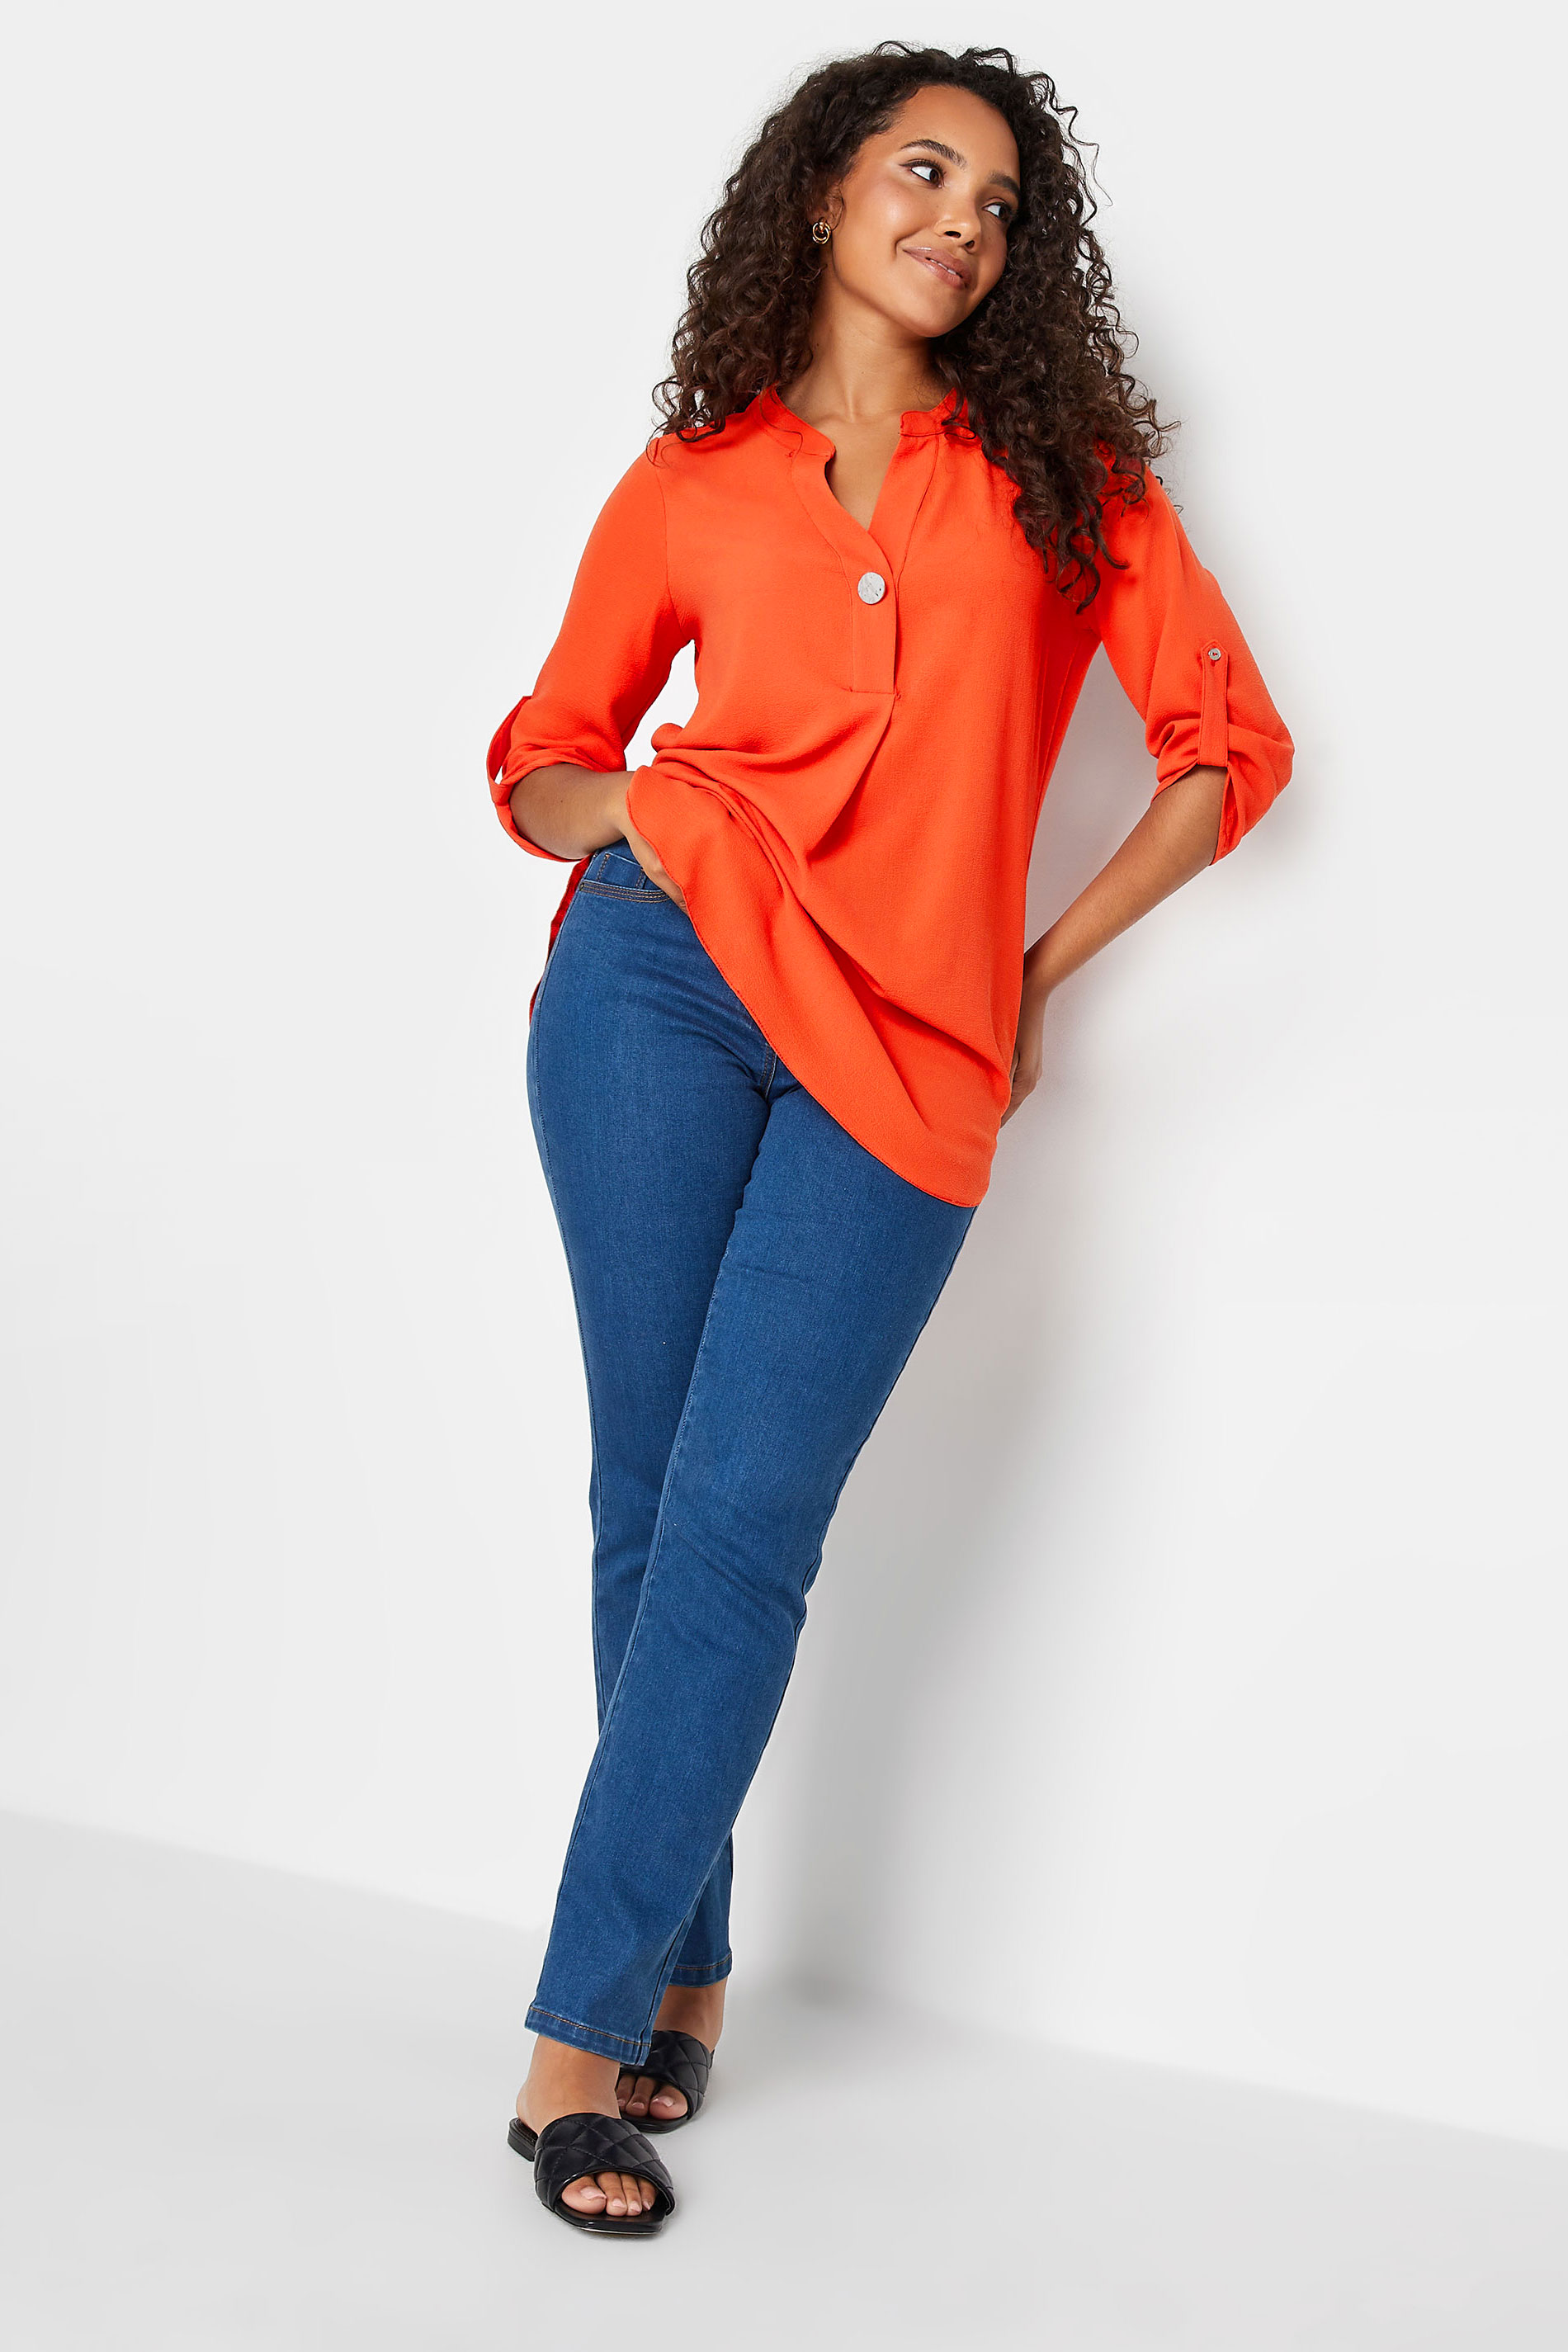 M&Co Bright Orange Statement Button Tab Sleeve Blouse | M&Co 2